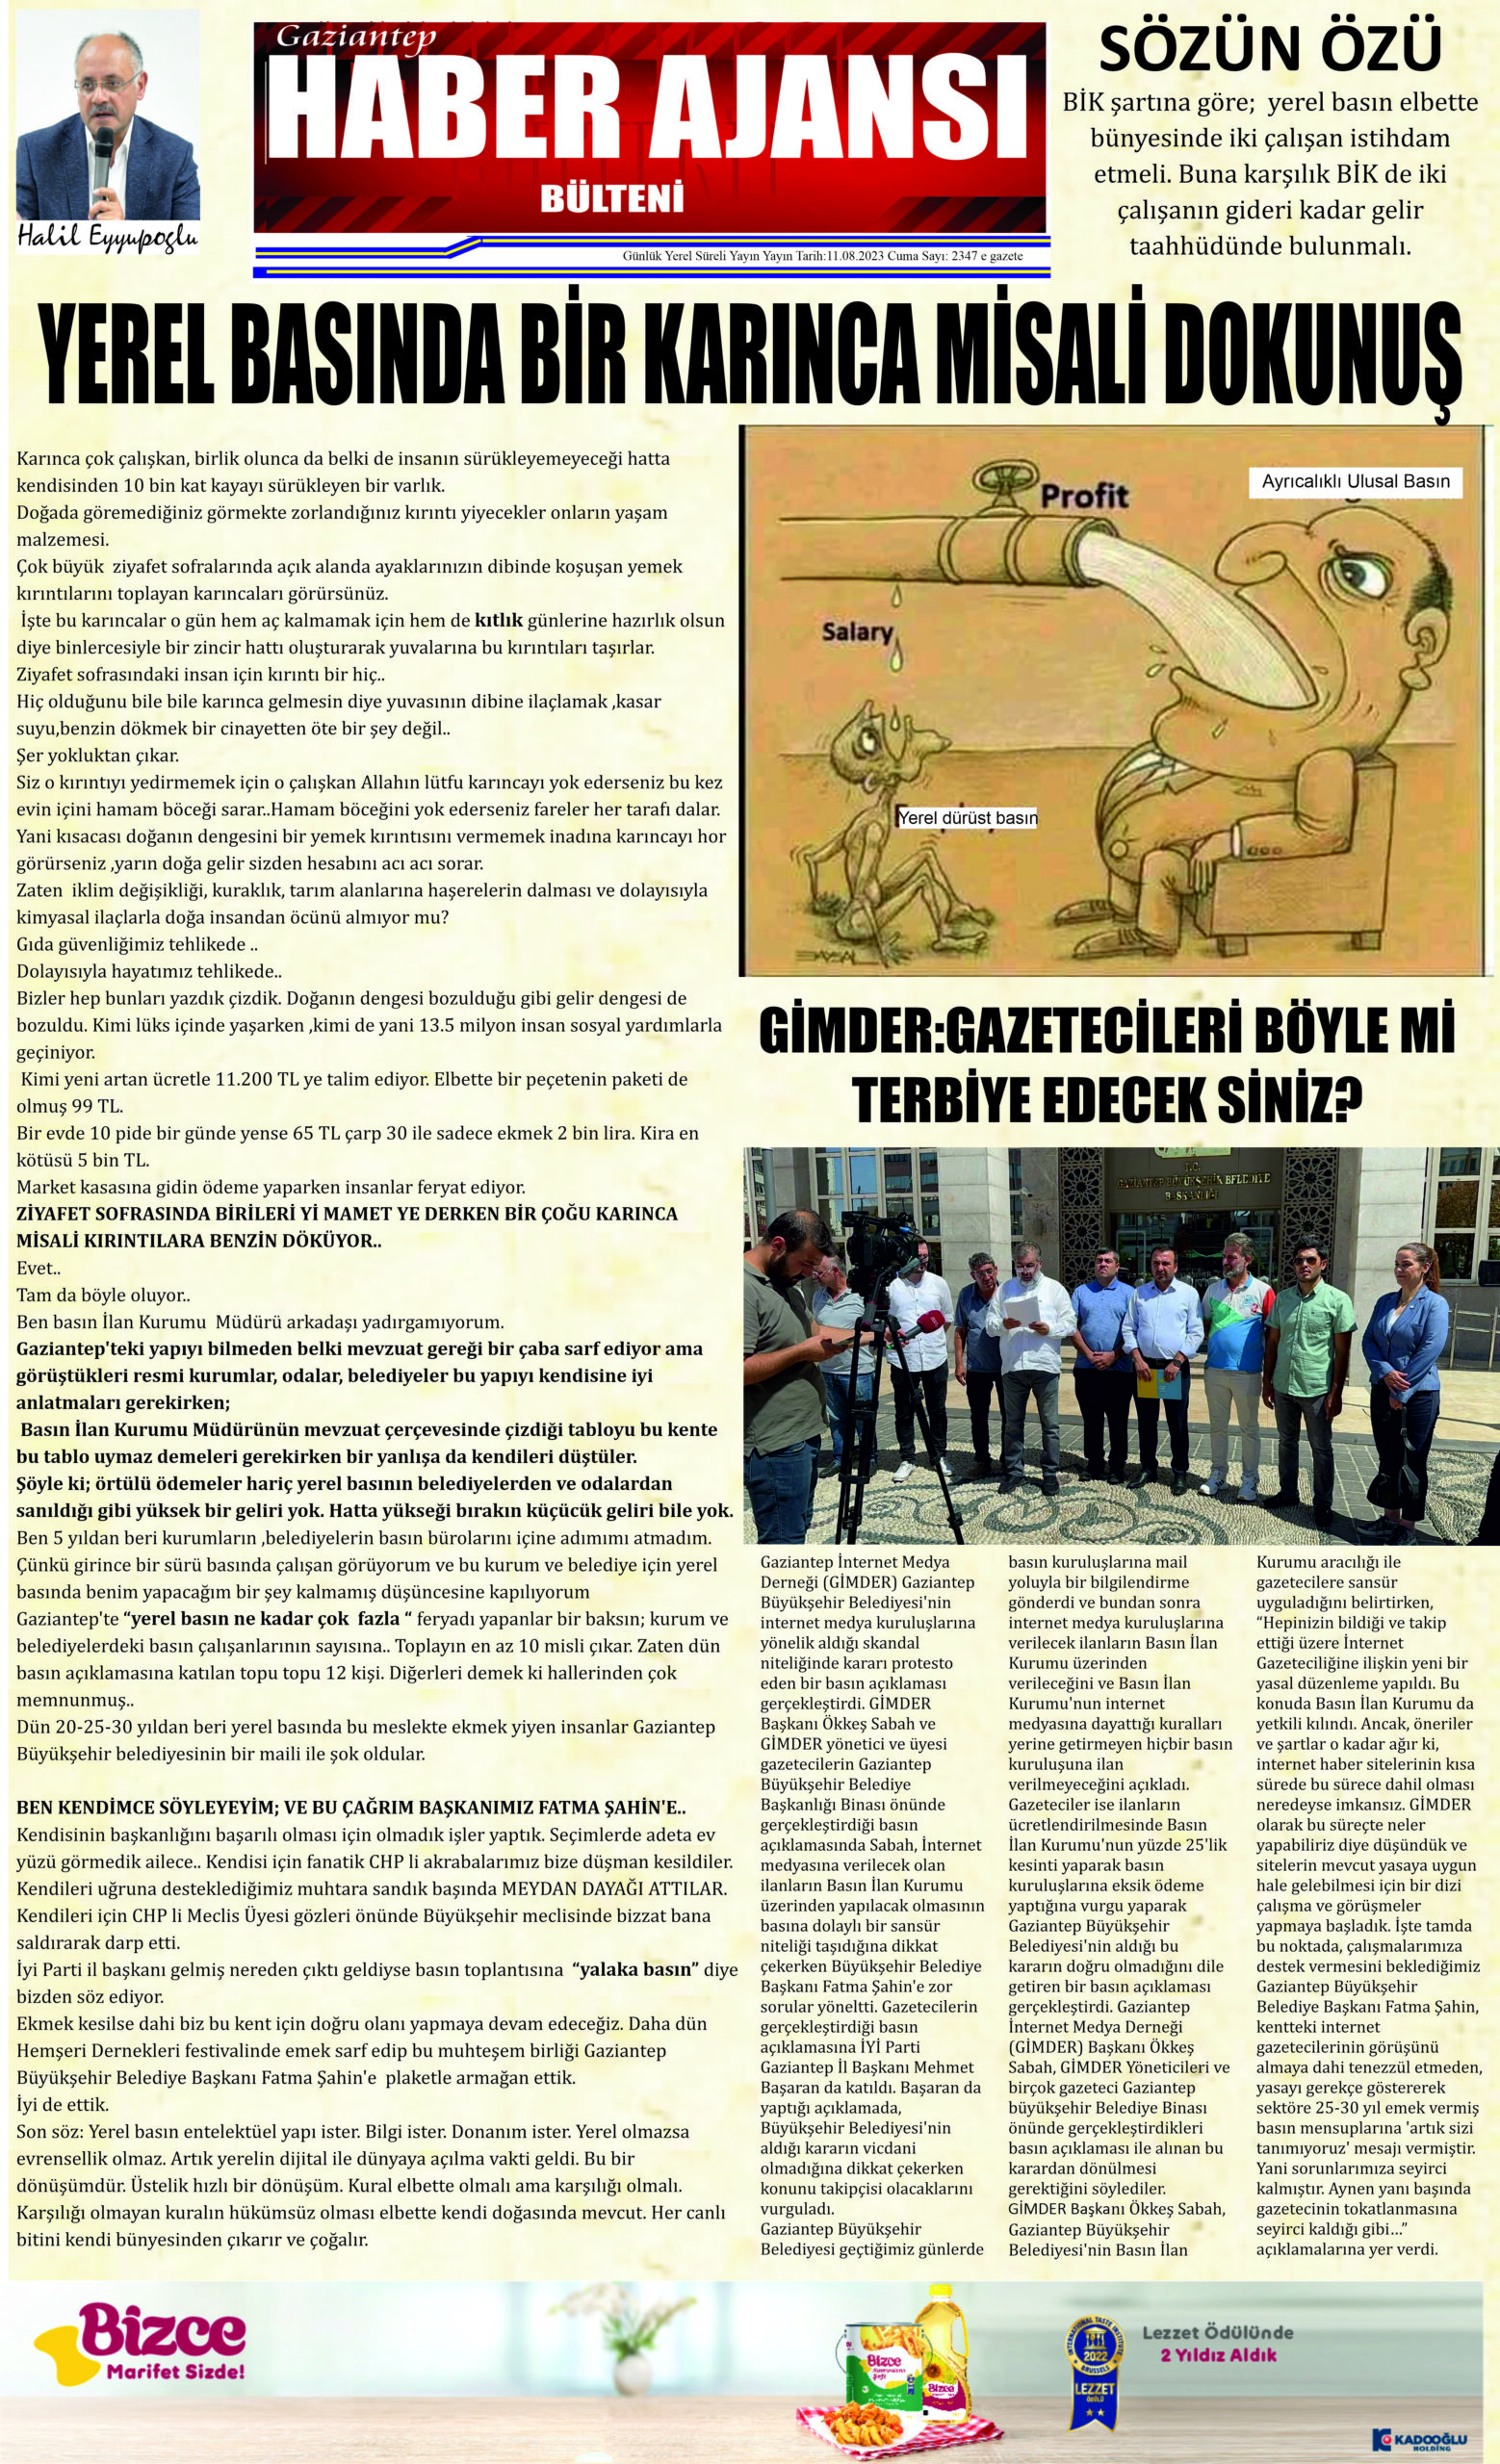 Gaziantep Haber Ajansı Bülteni Cuma 11.08.2023 e gazete